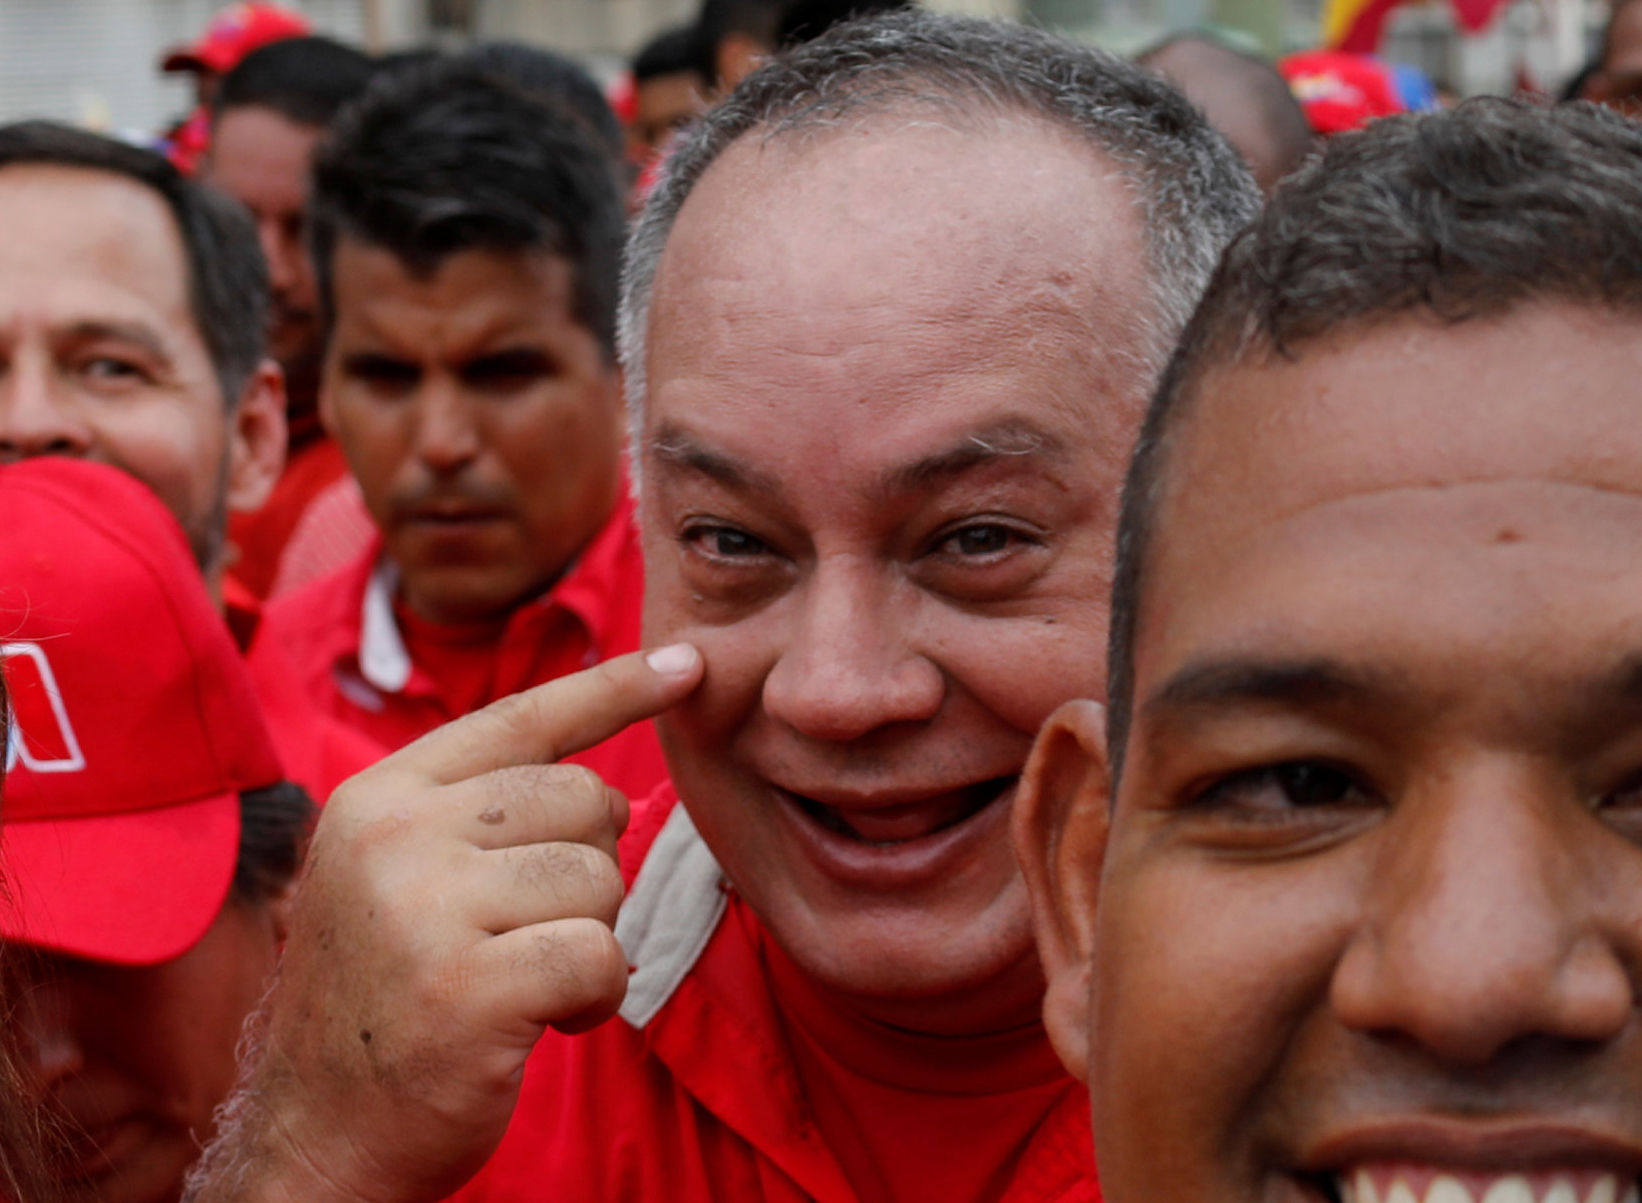 Diosdado vuelve a atacar al canciller de Colombia con un insólito tuit (IMAGEN)